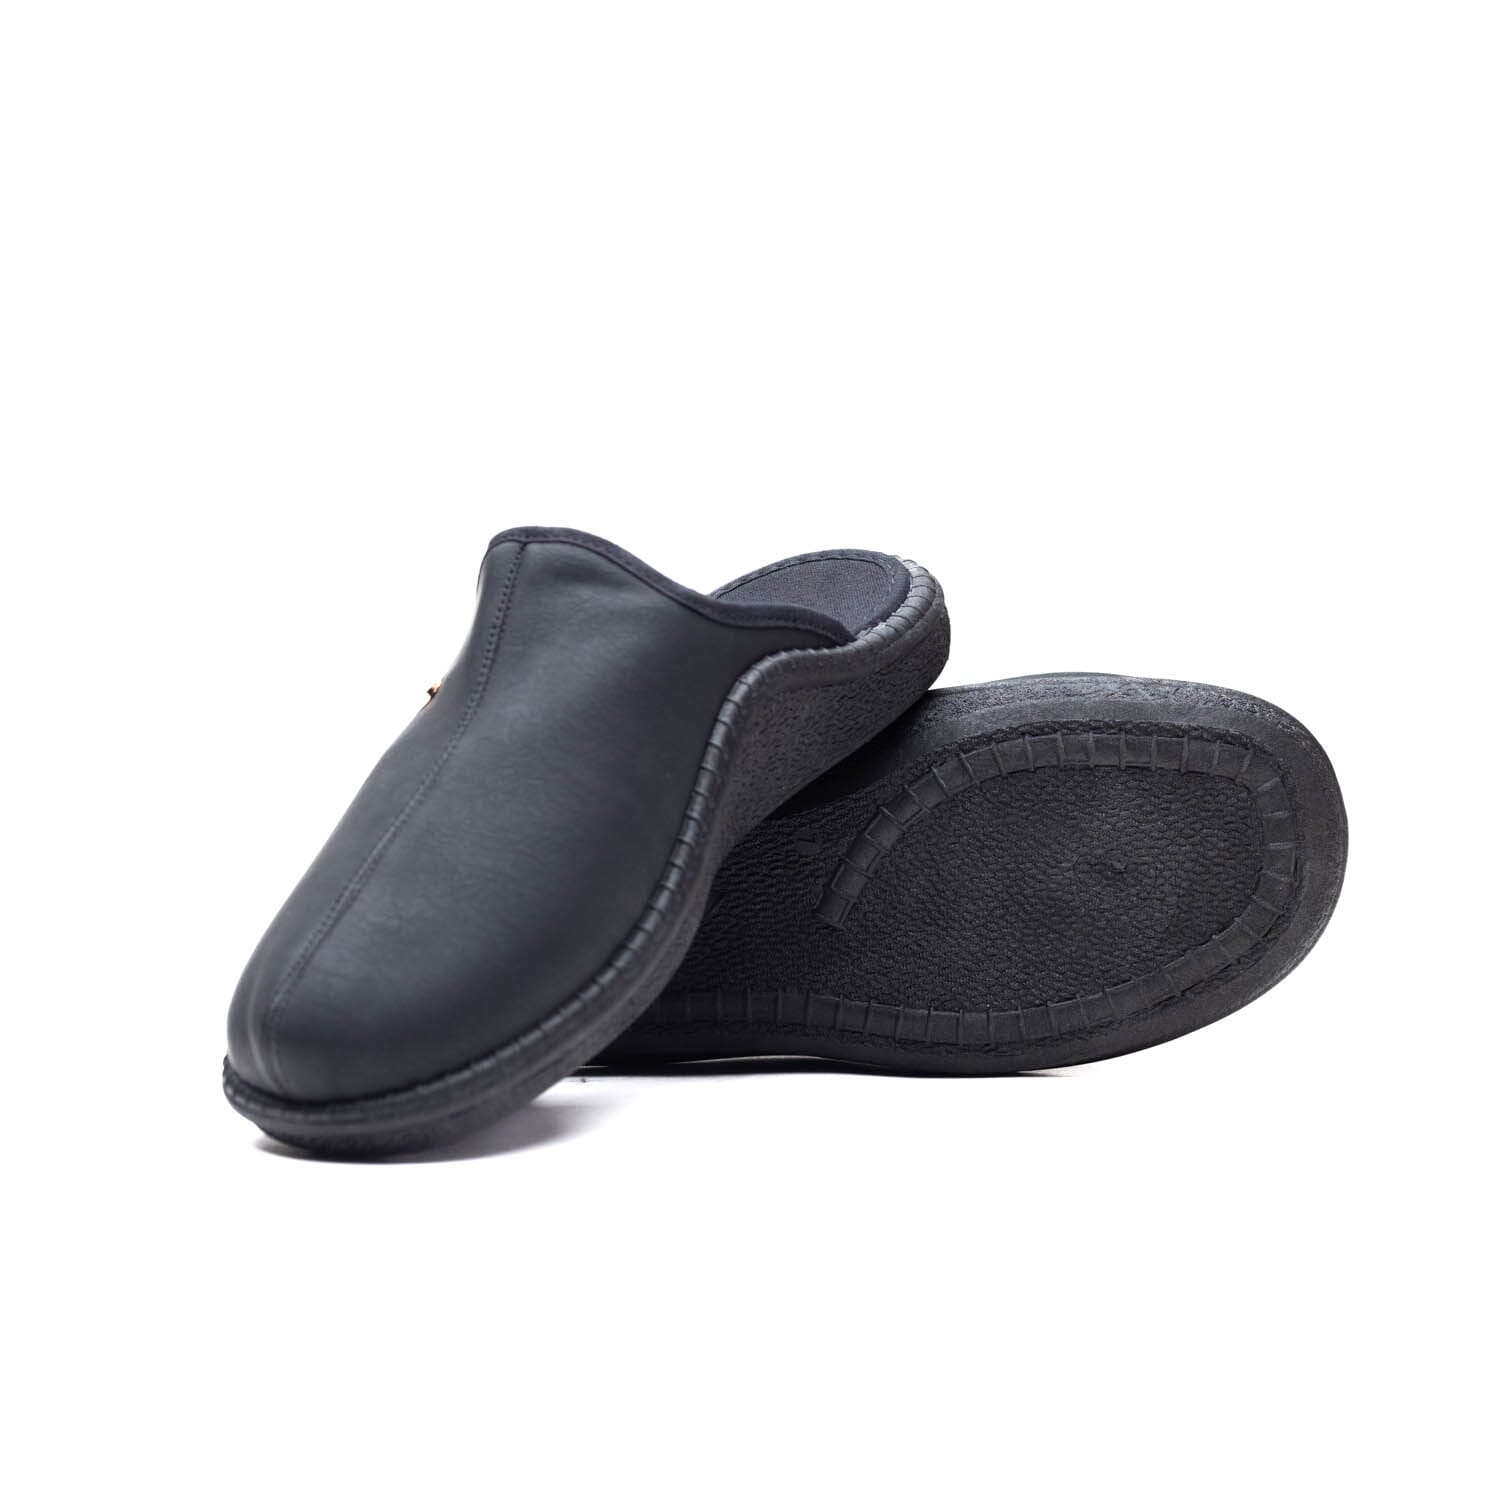 PIERRE CARDIN – PCM 100 – BLACK MONO – Perocili Shoes